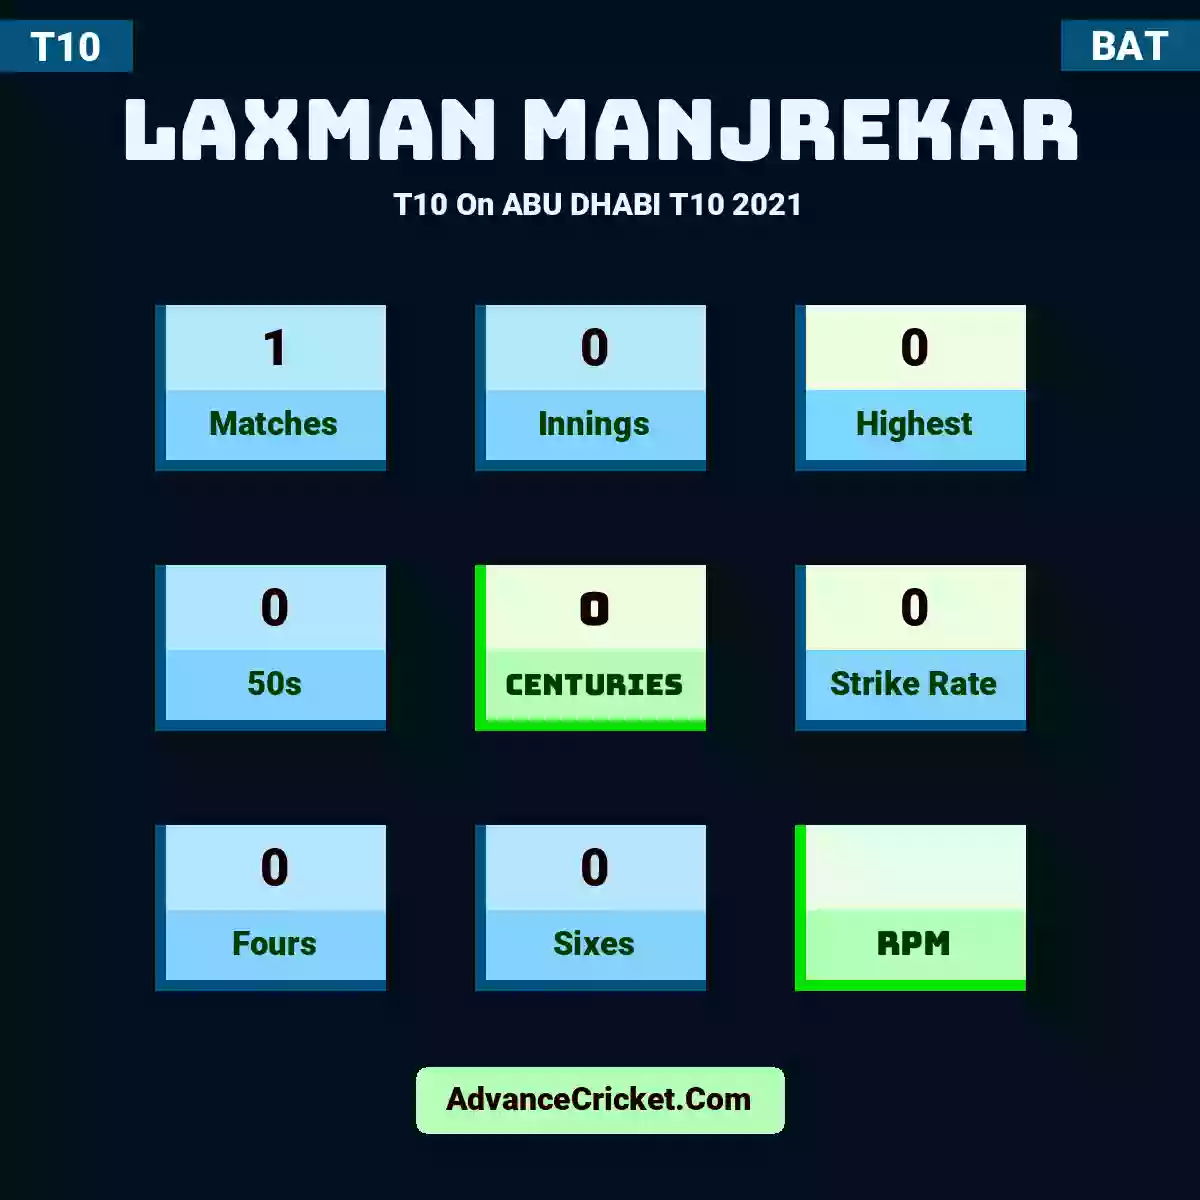 Laxman Manjrekar T10  On ABU DHABI T10 2021, Laxman Manjrekar played 1 matches, scored 0 runs as highest, 0 half-centuries, and 0 centuries, with a strike rate of 0. L.Manjrekar hit 0 fours and 0 sixes.